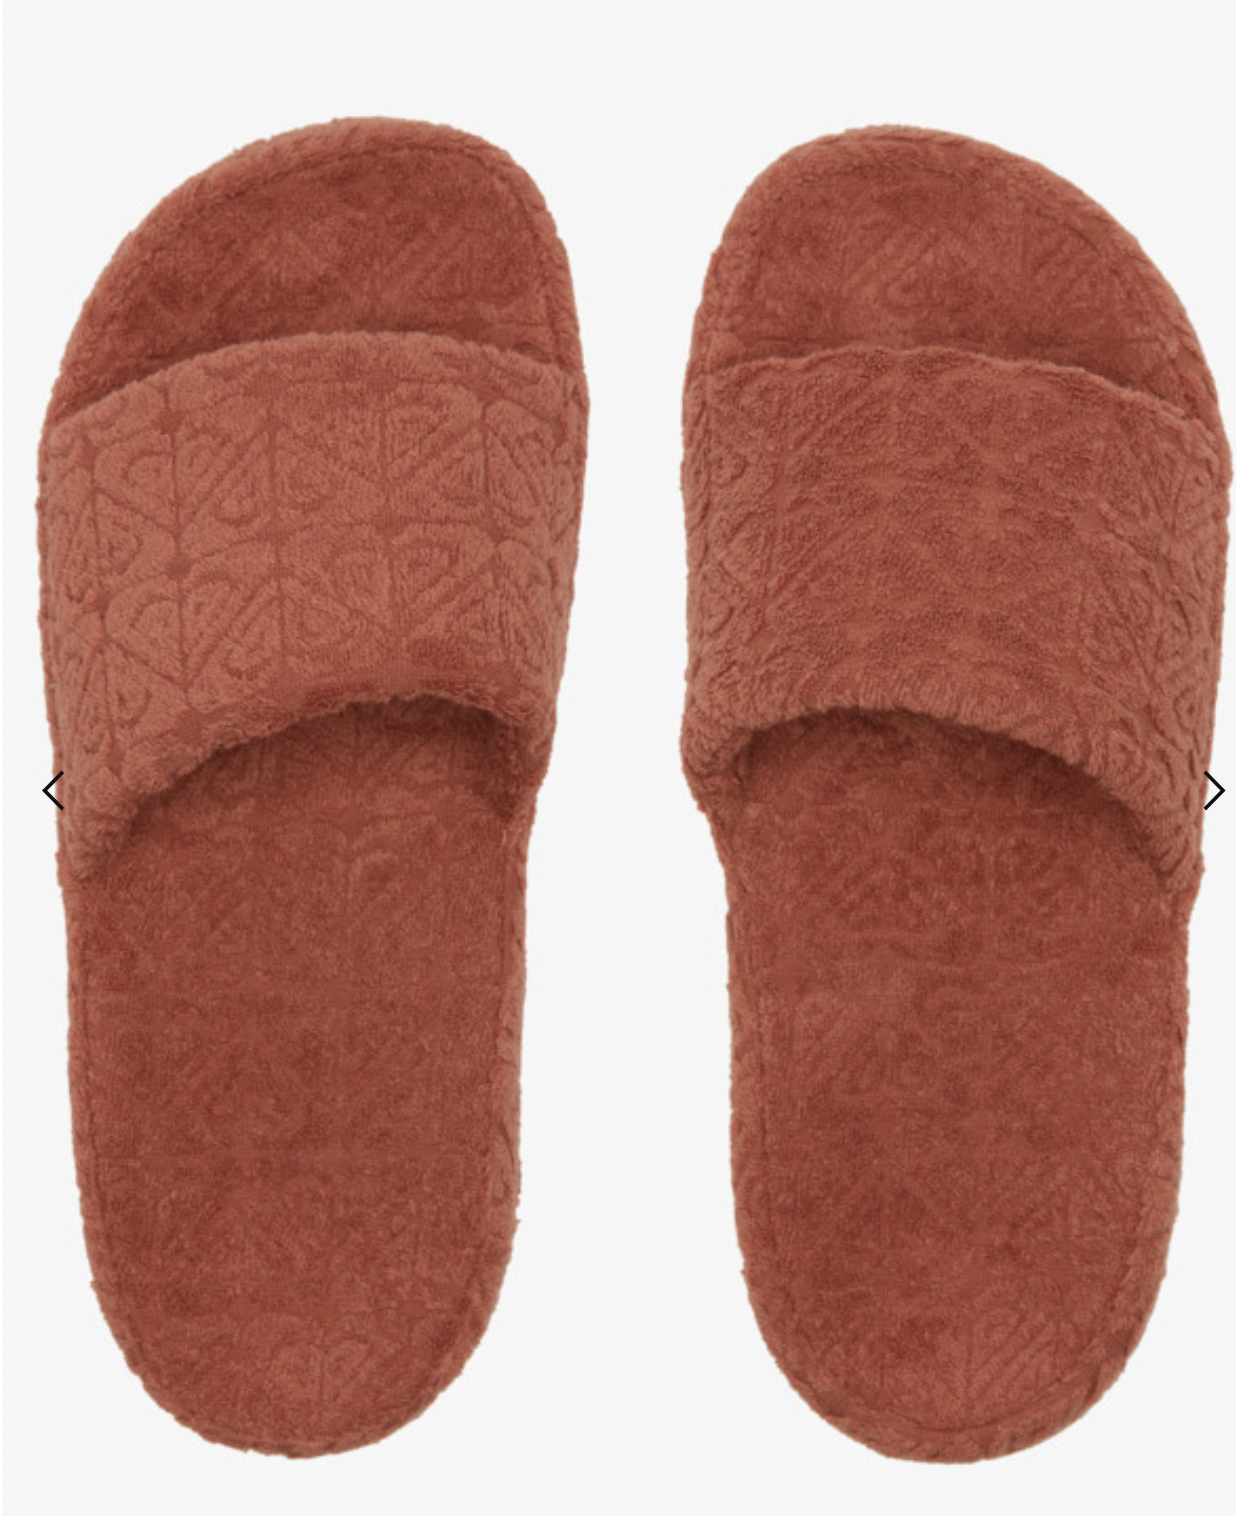 ROXY Slippy - Sandals for Women